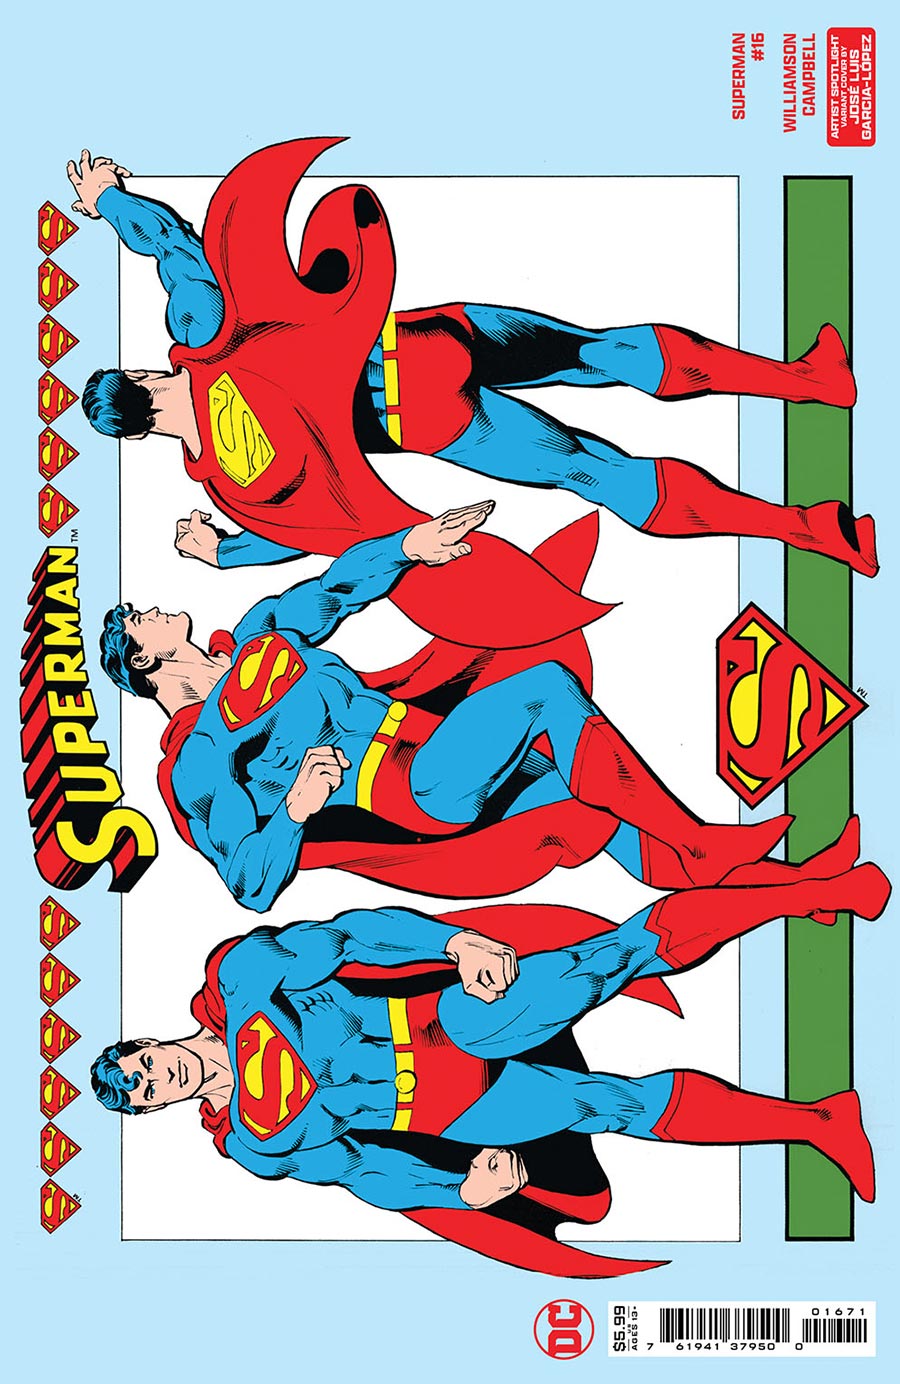 Superman Vol 7 #16 Cover E Variant Jose Luis Garcia-Lopez Artist Spotlight Wraparound Card Stock Cover (Absolute Power Tie-In)